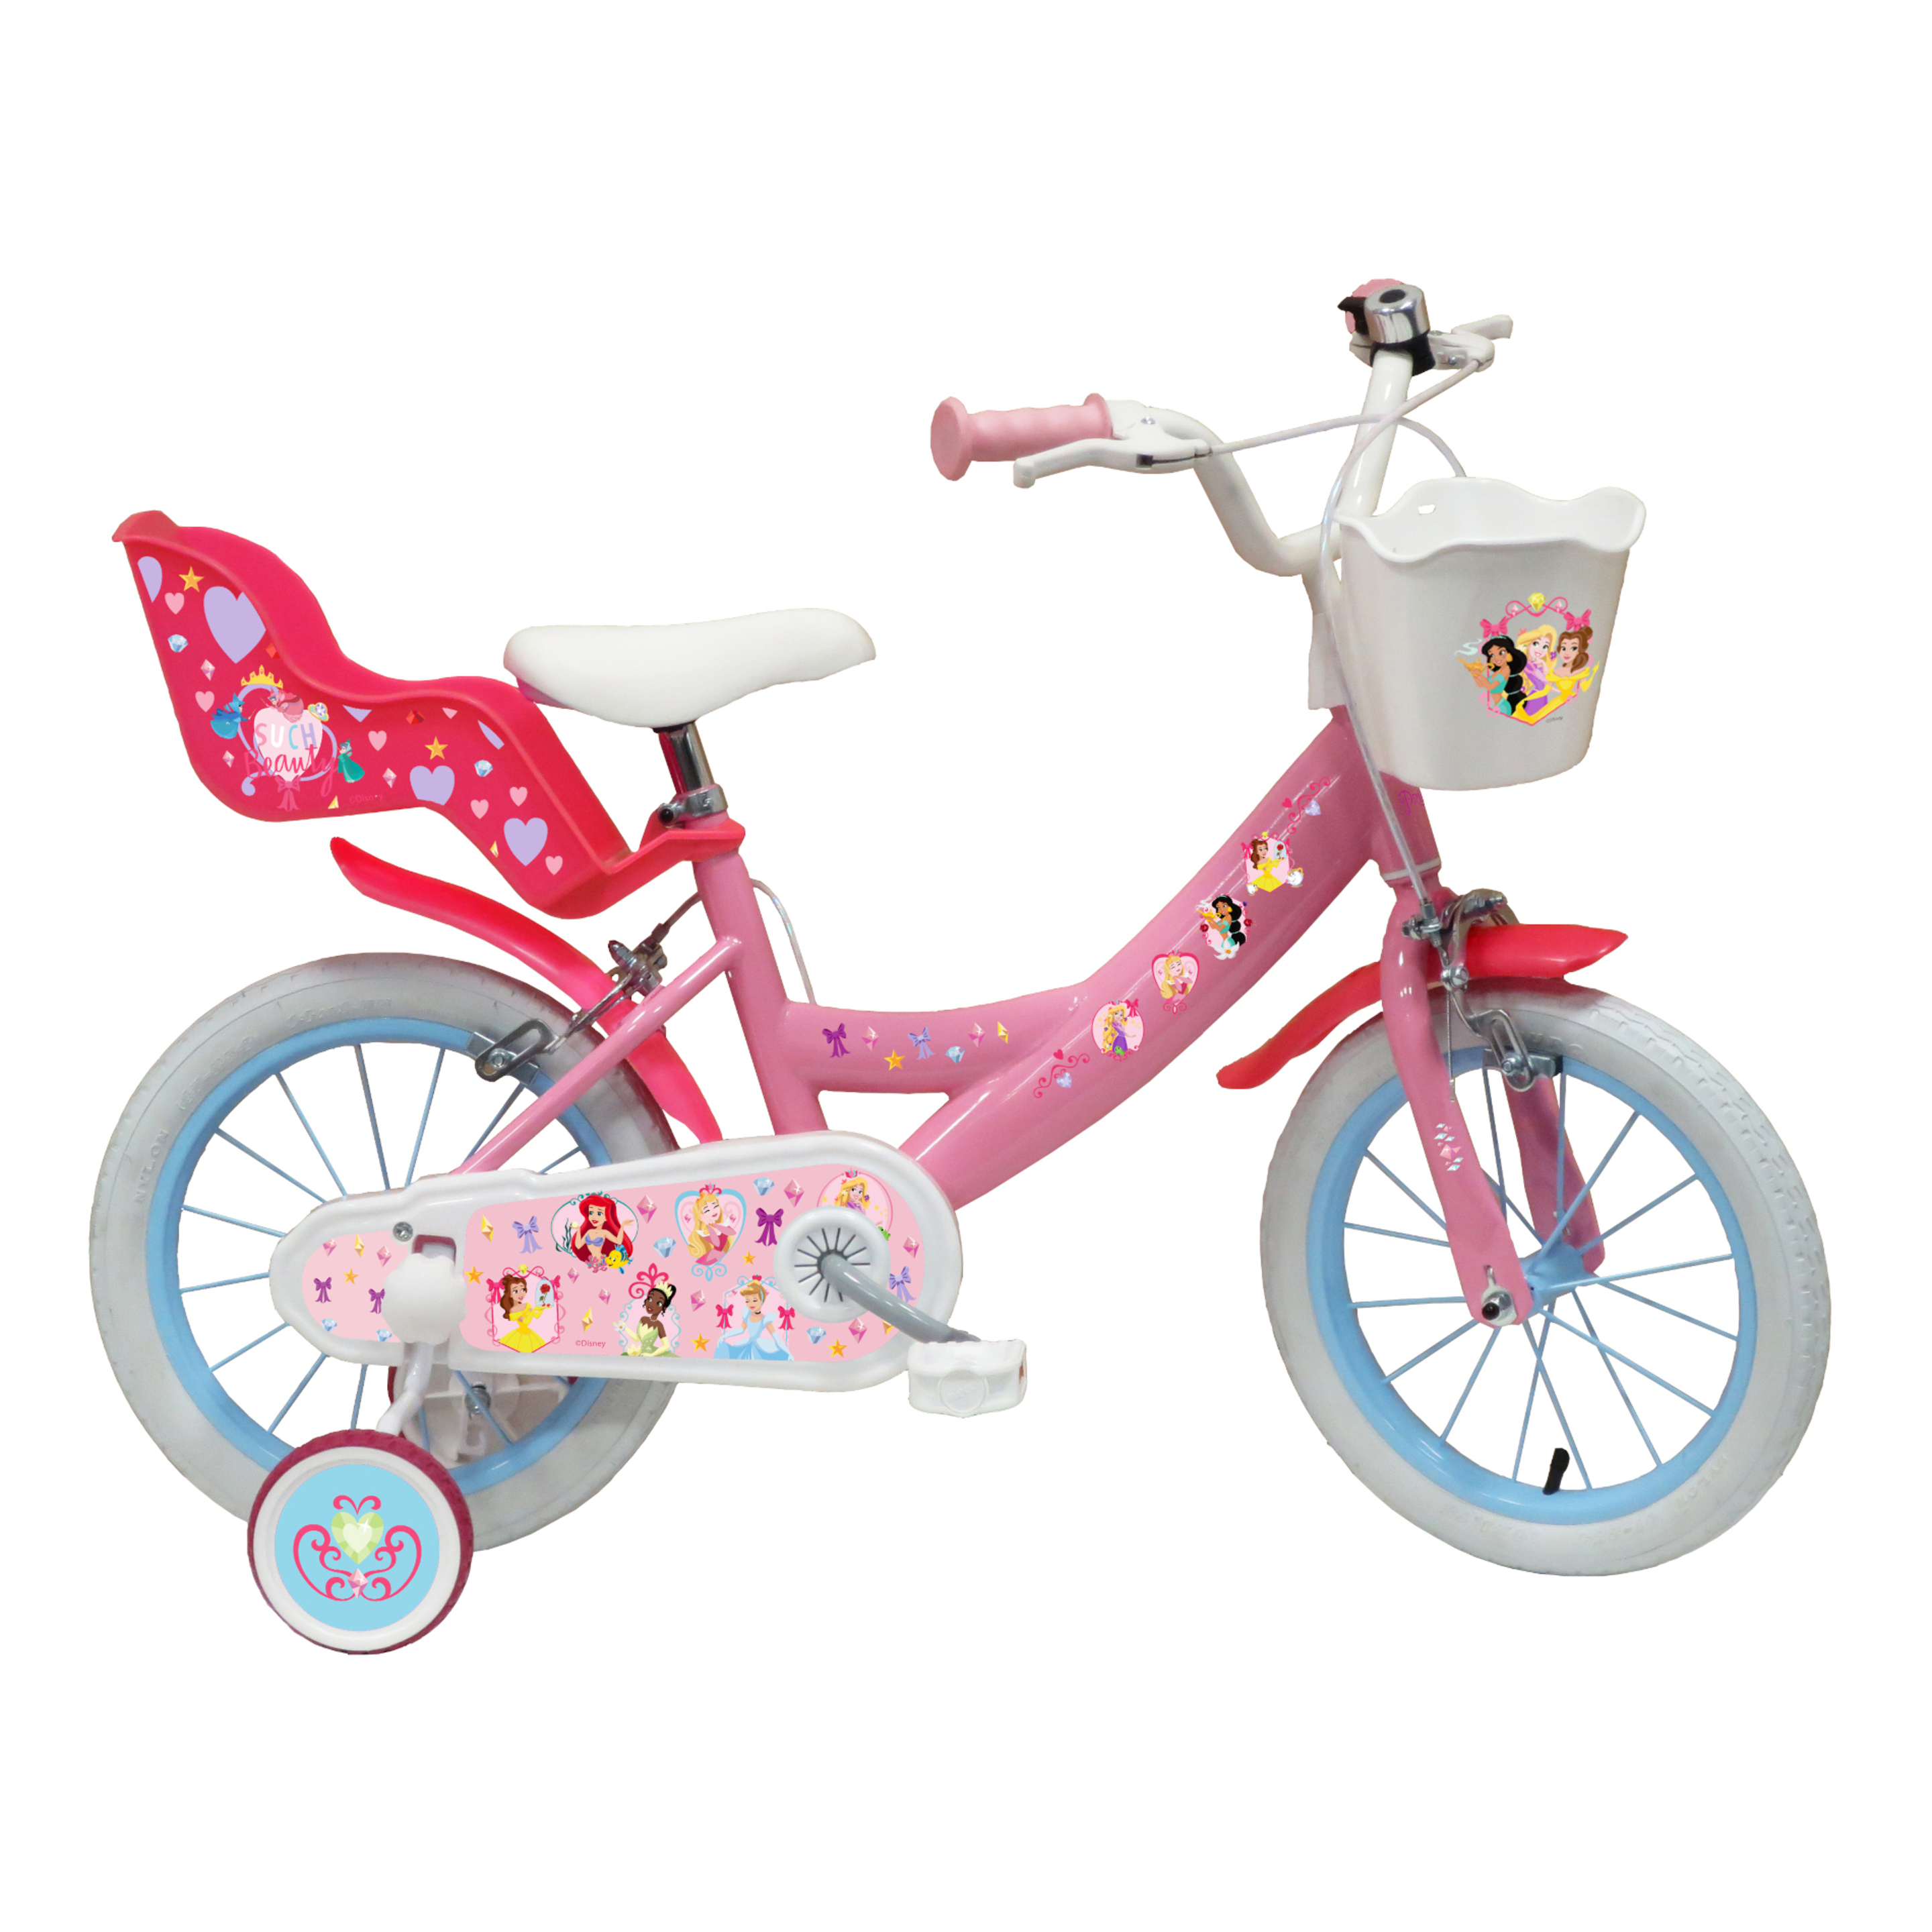 Bicicleta Niña 14 Pulgadas Disney Princess 4-6 Años - rosa - 